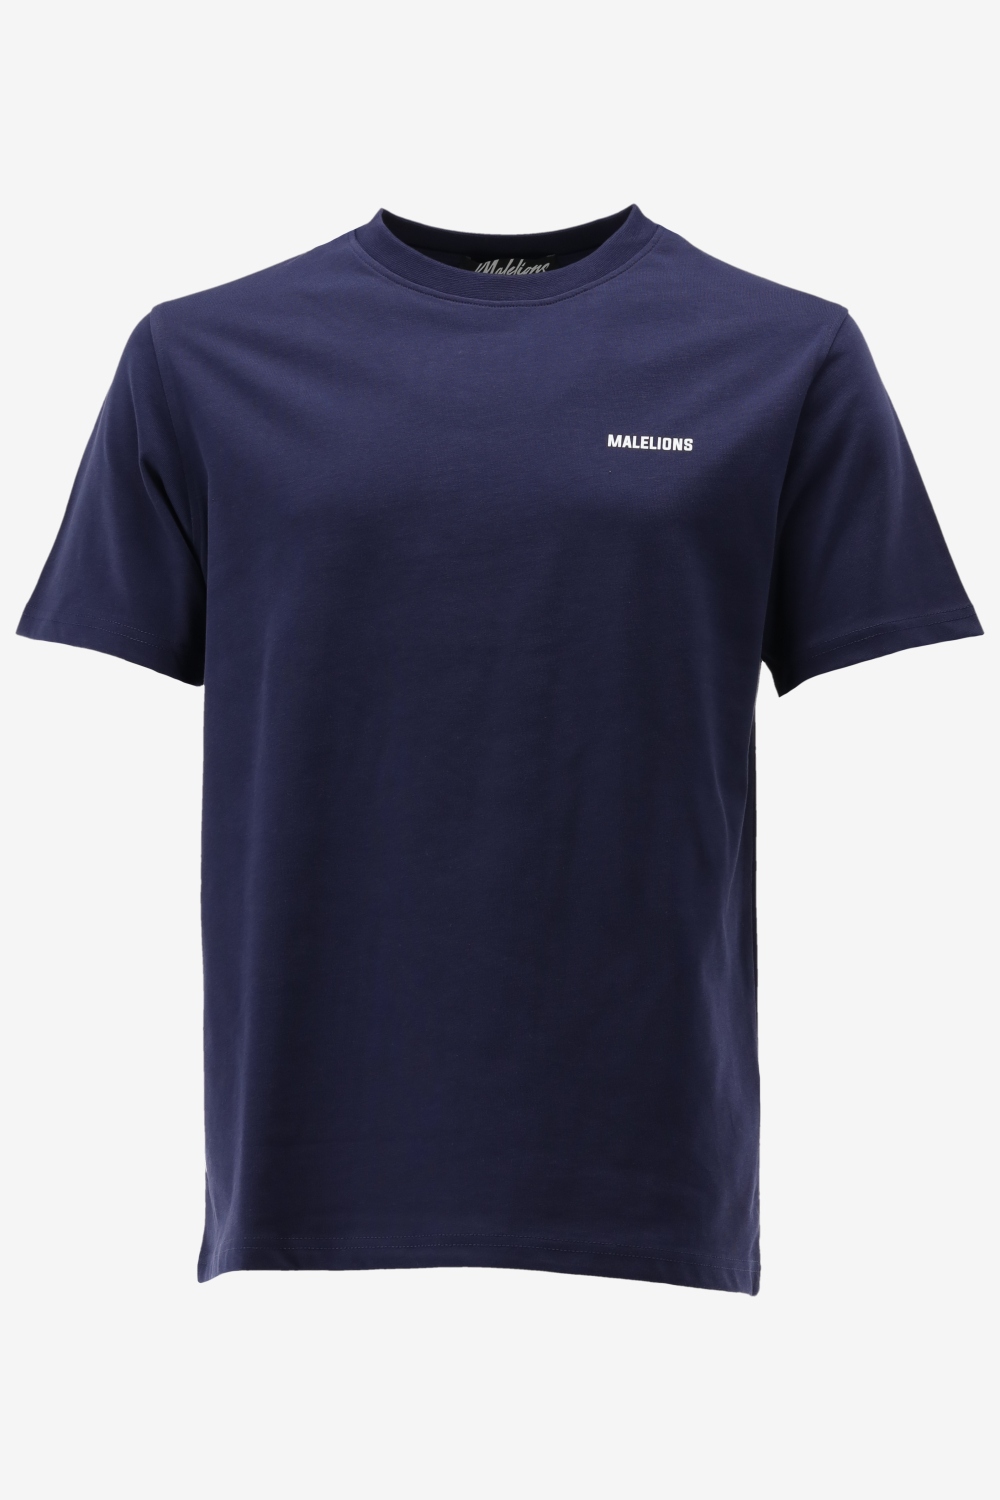 Malelions T-shirt MEN LOGO T-SHIRT